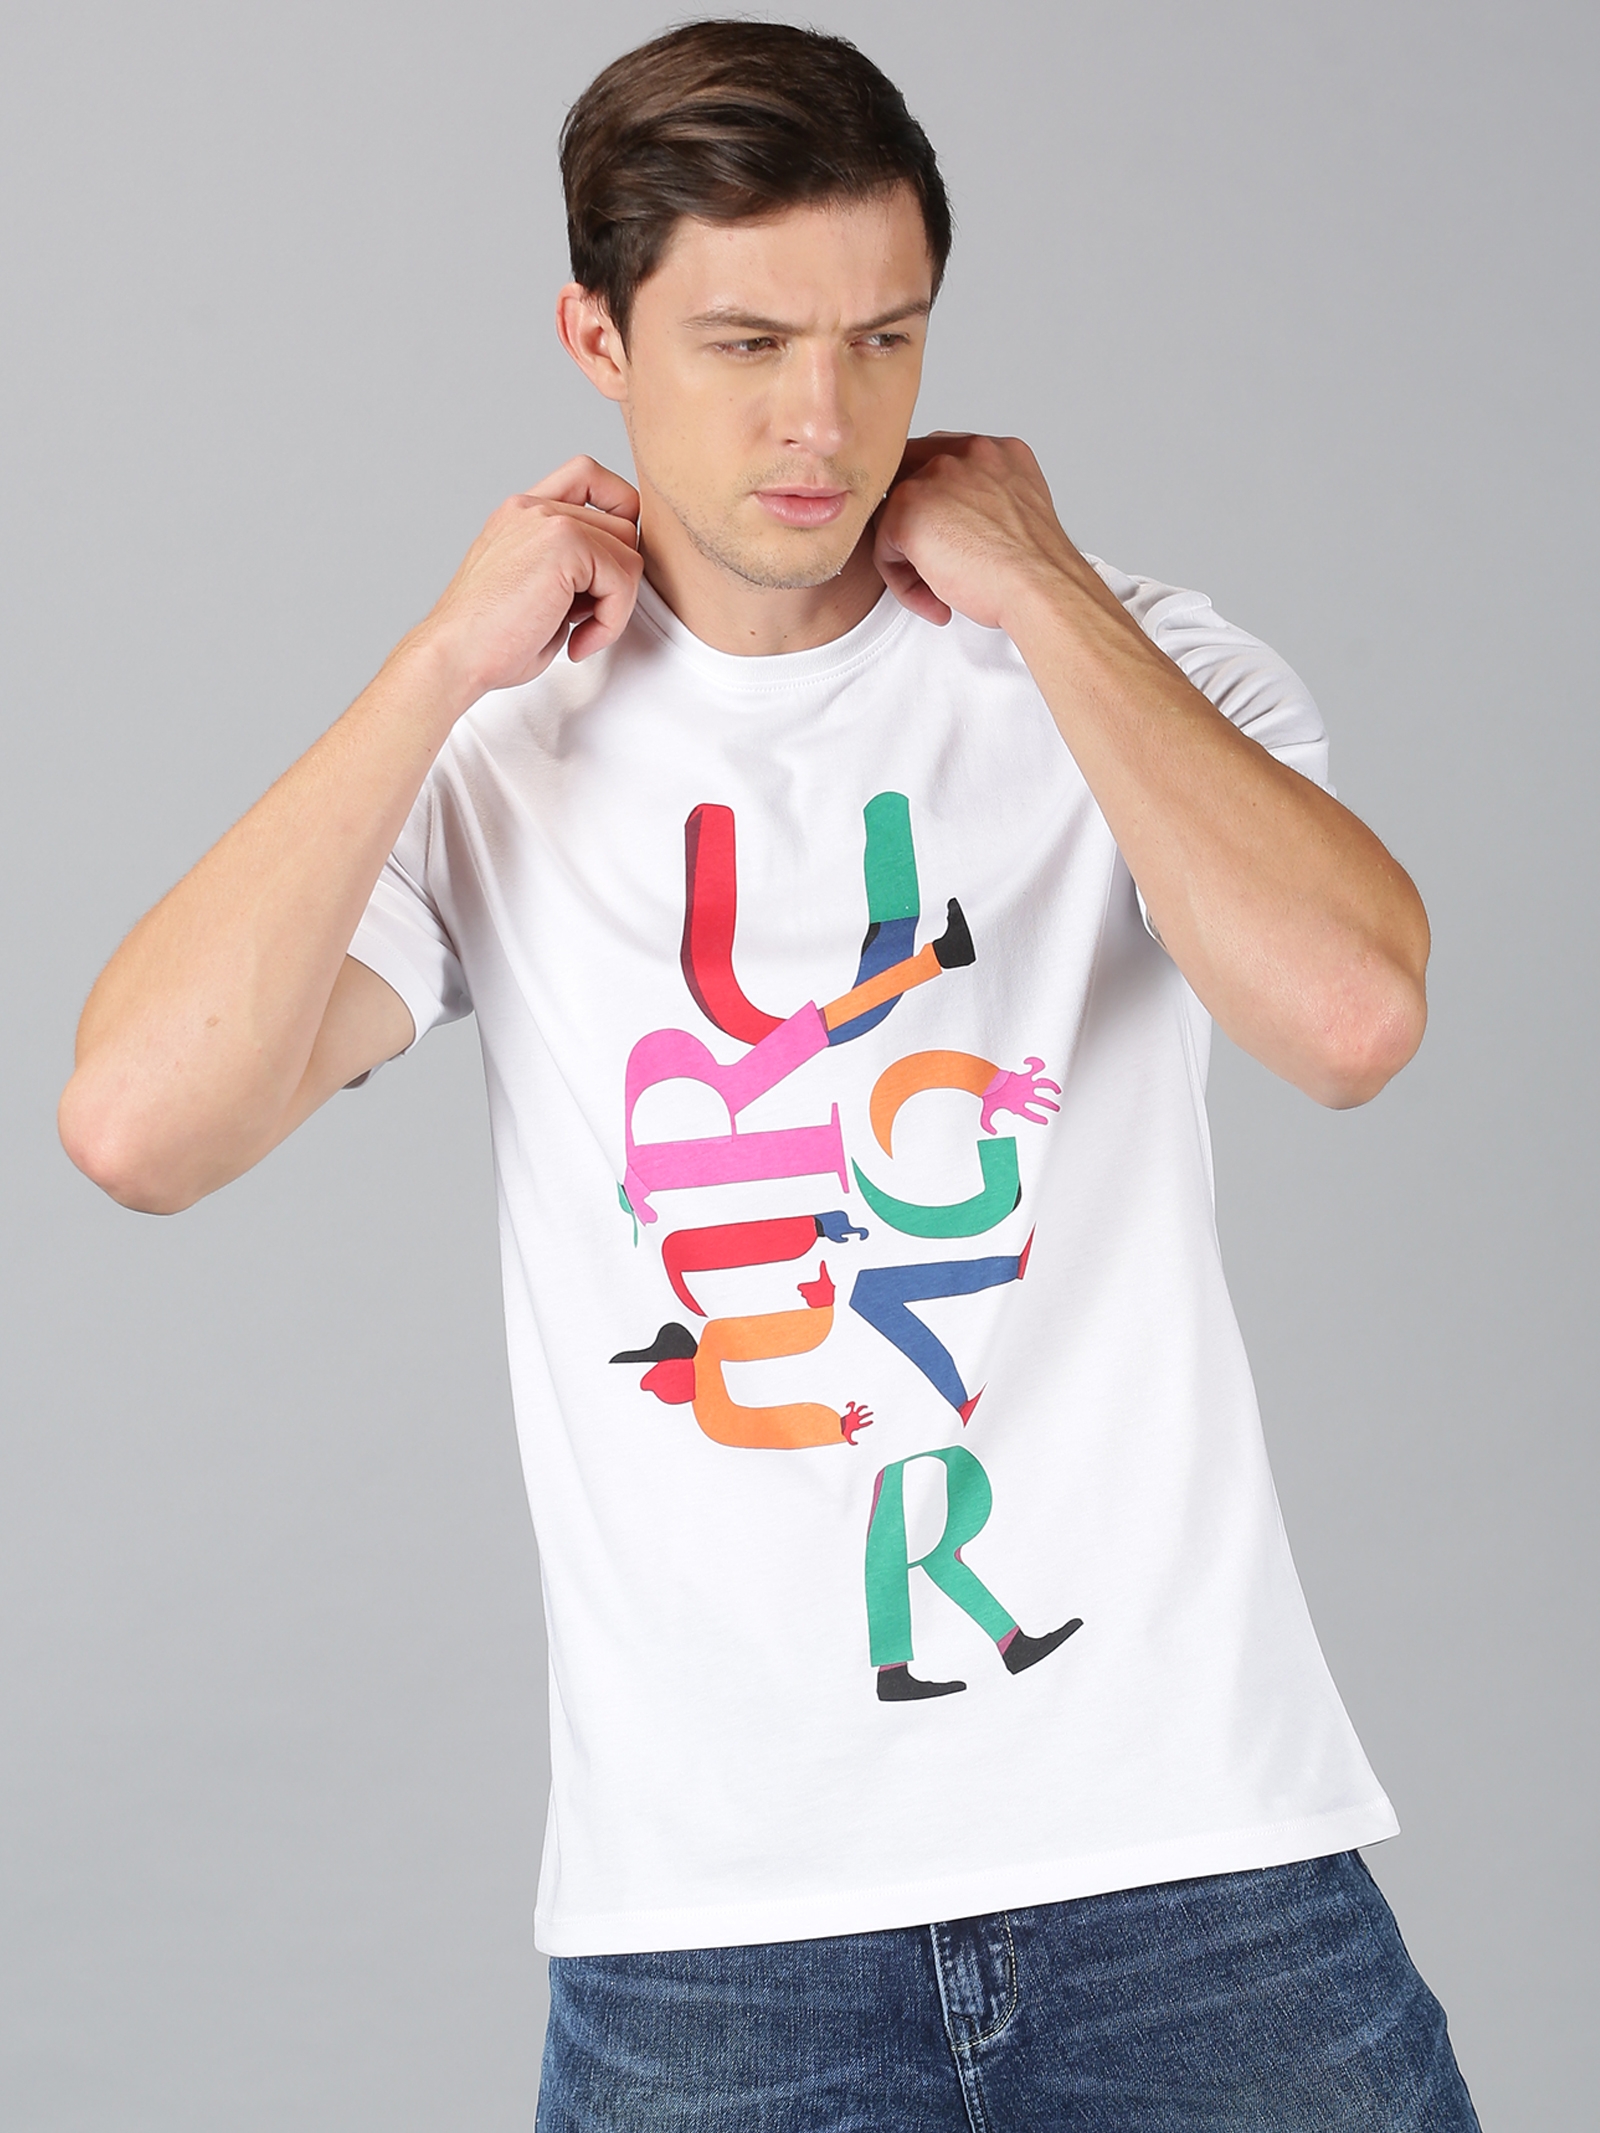 UrGear | UrGear Tyopography Men Crew Neck White T-Shirt